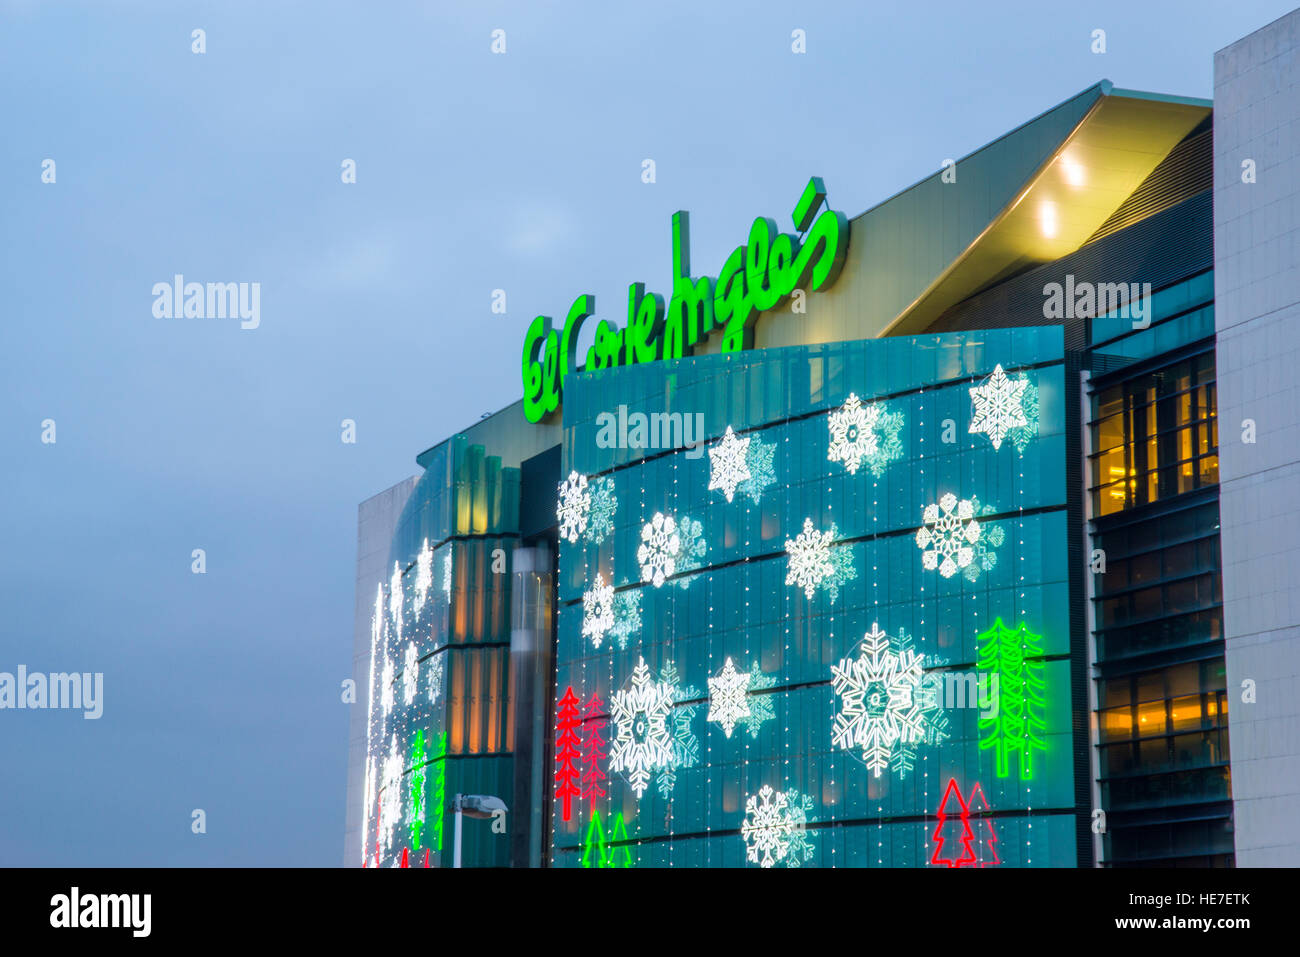 Facade of El Corte Ingles shopping center at Christmas, night view. Sanchinarro, Madrid, Spain. Stock Photo